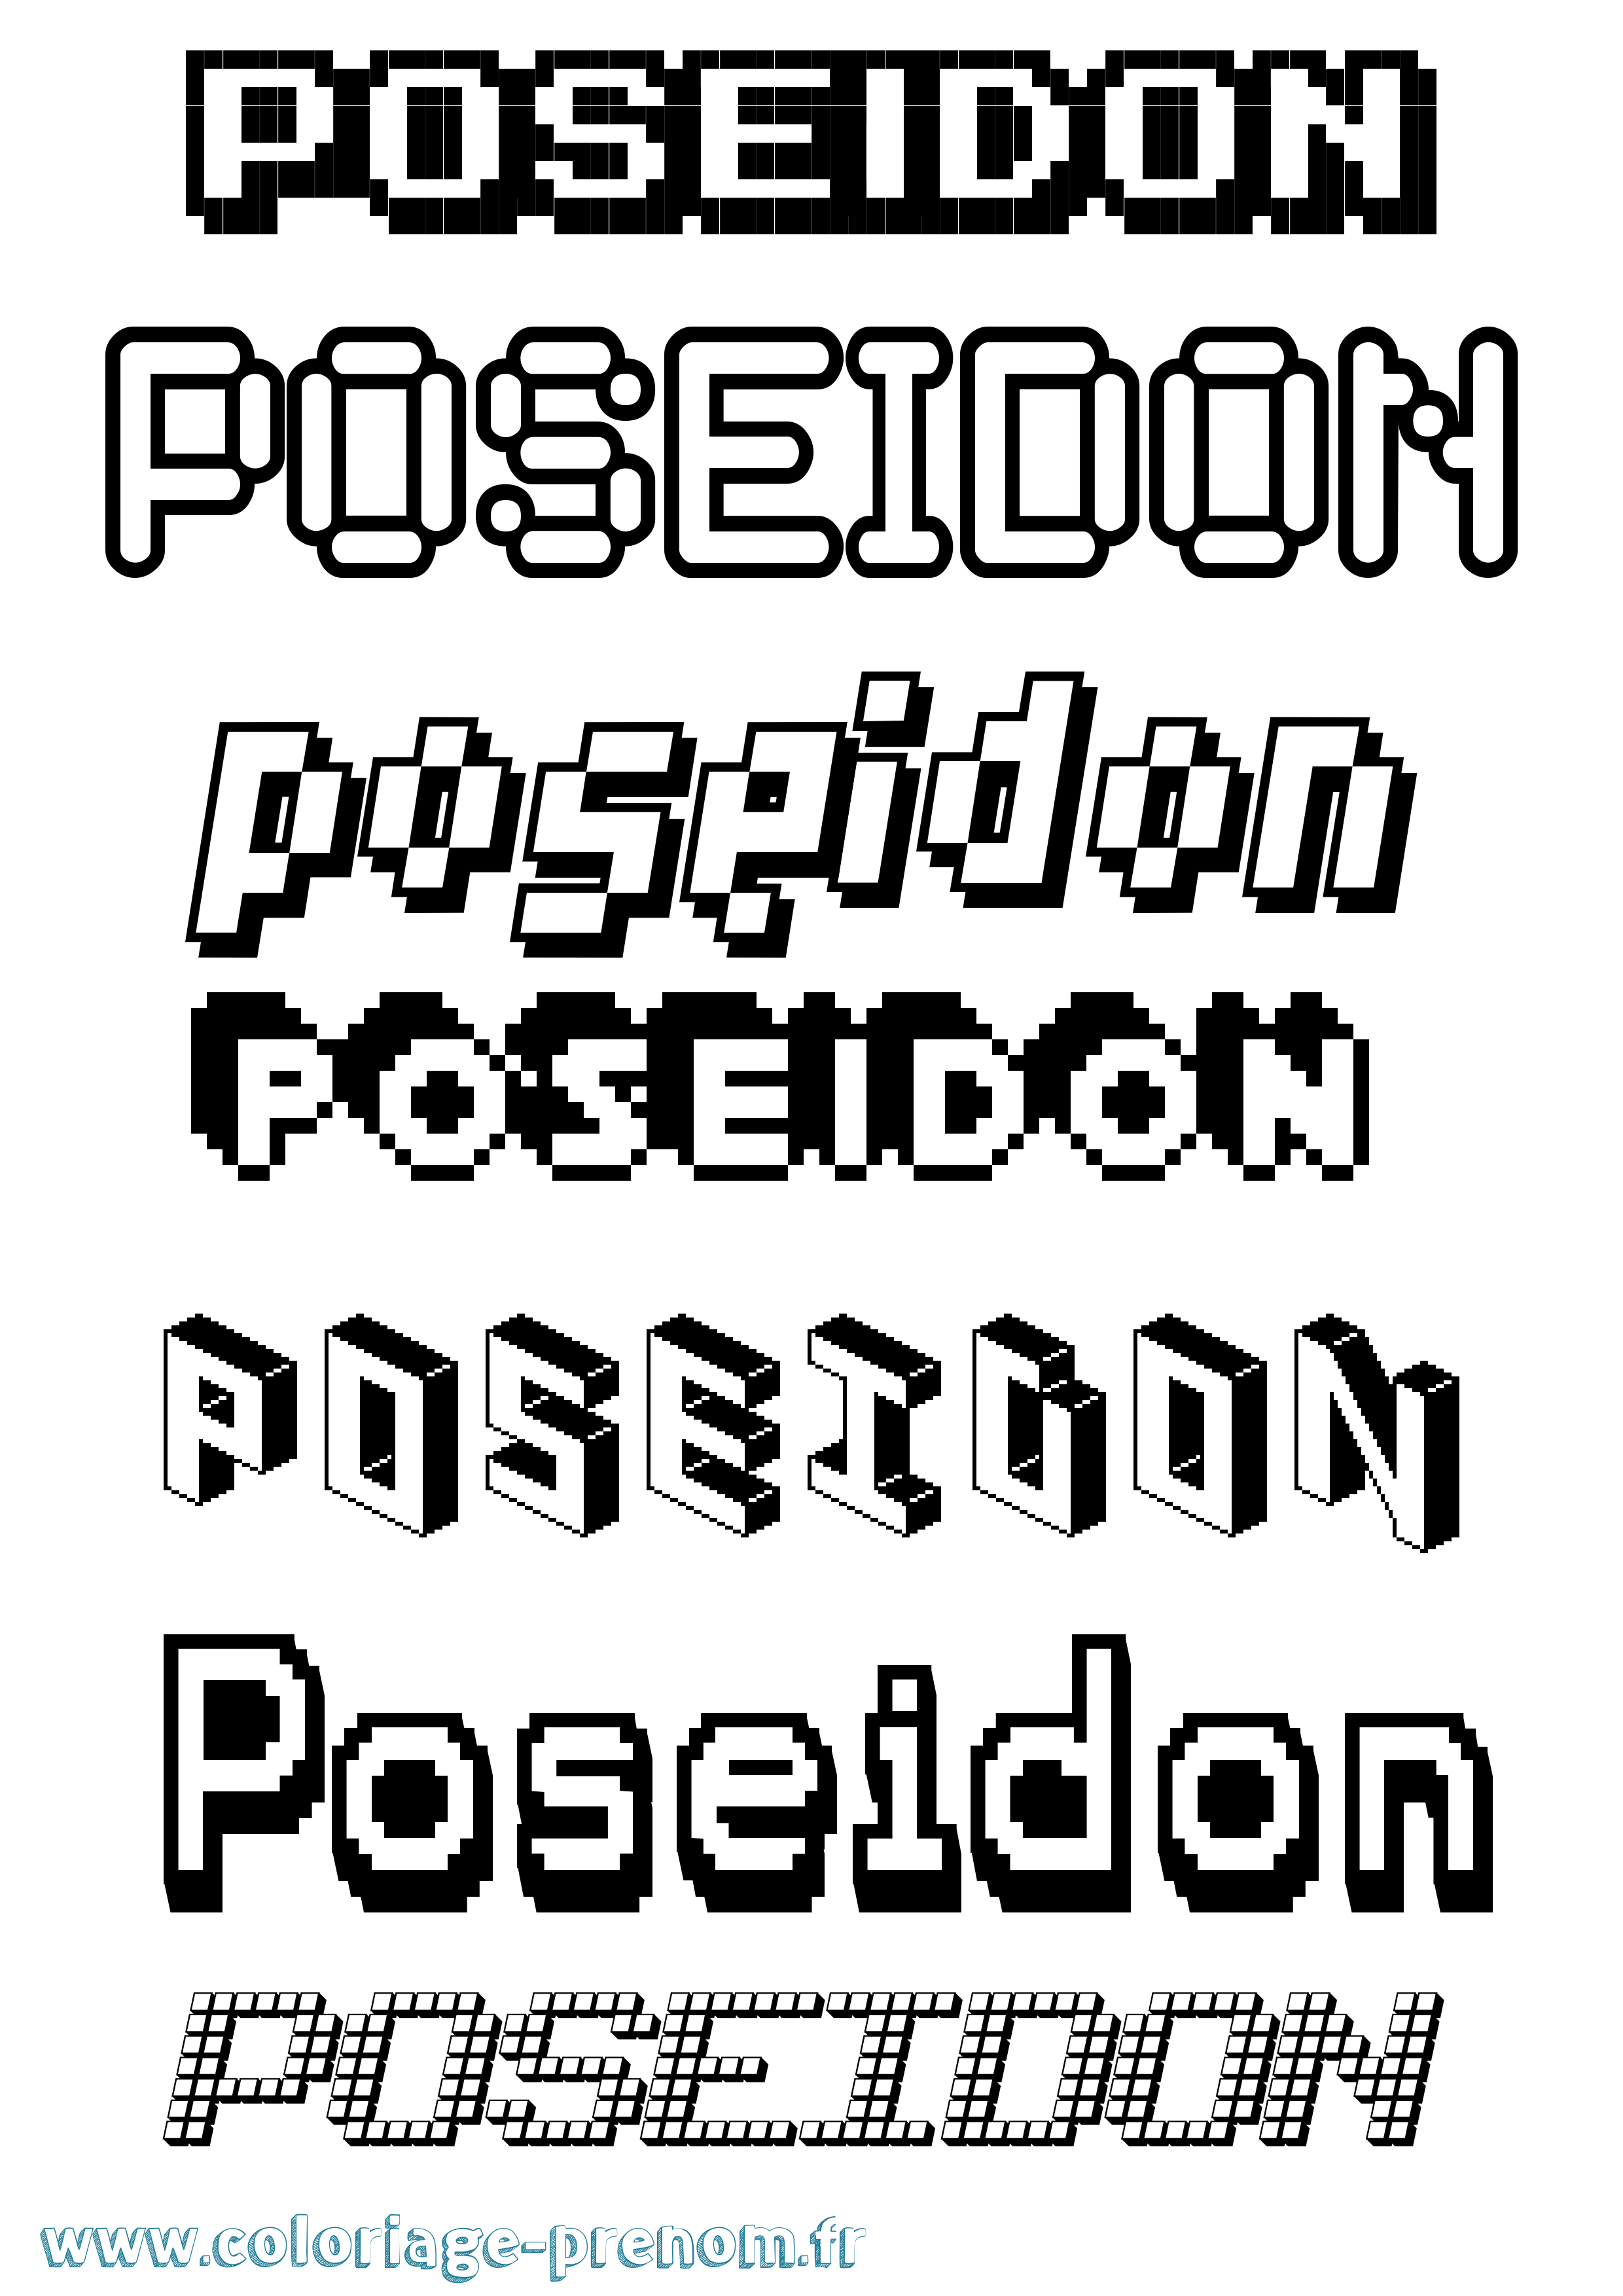 Coloriage prénom Poseidon Pixel